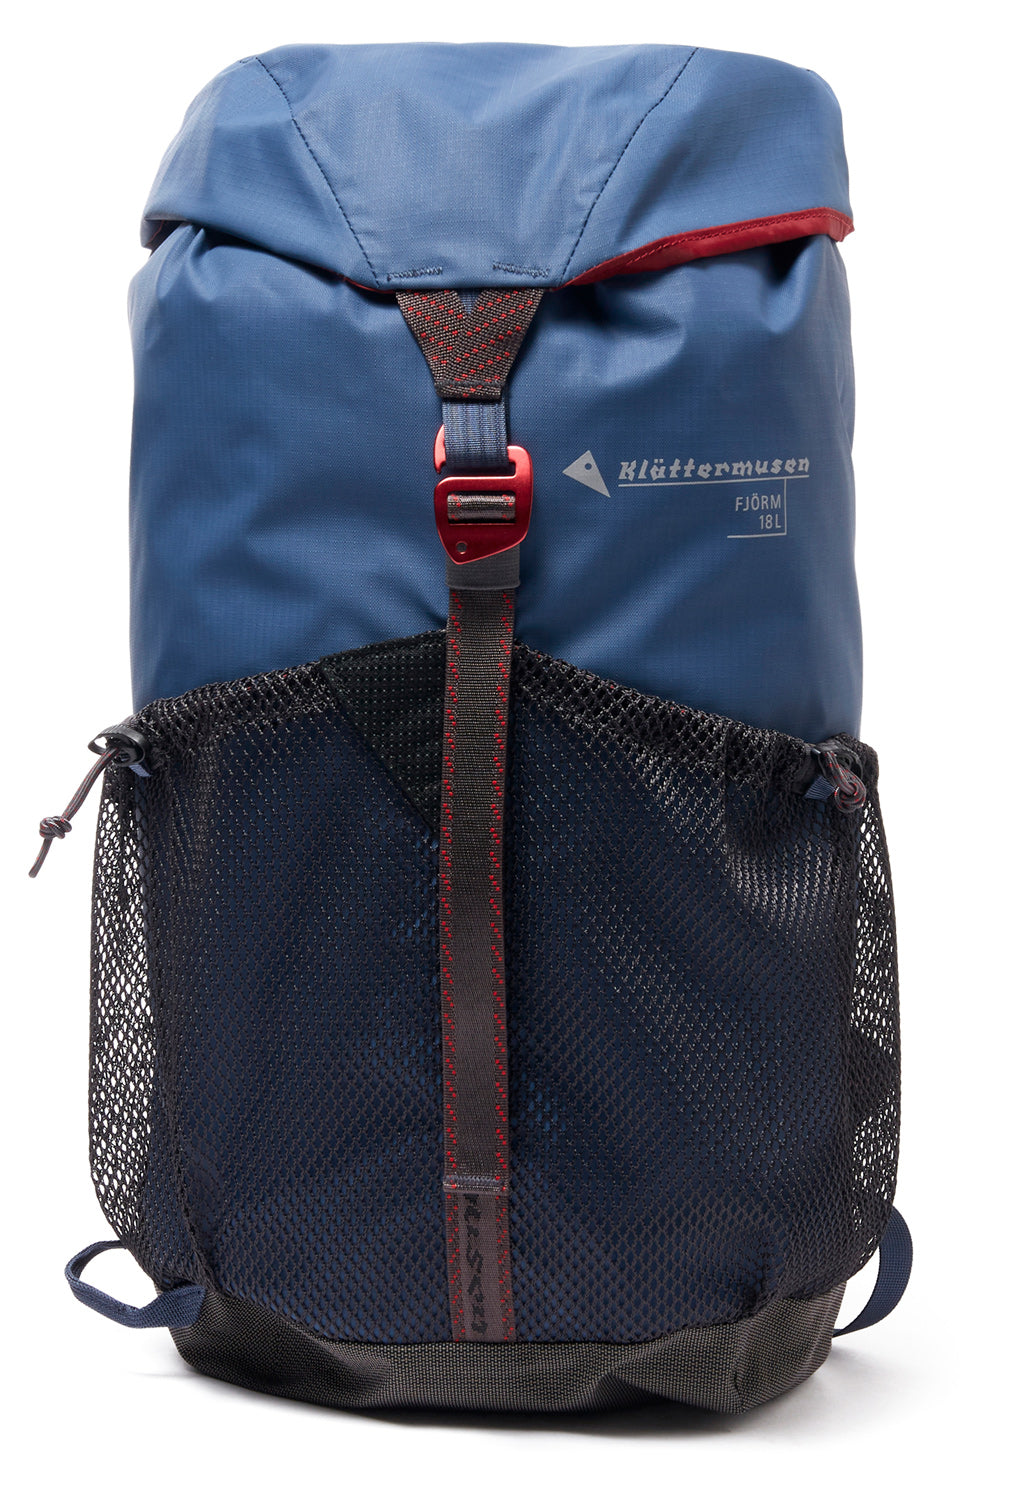 Klattermusen Fjorm Backpack 18L 1